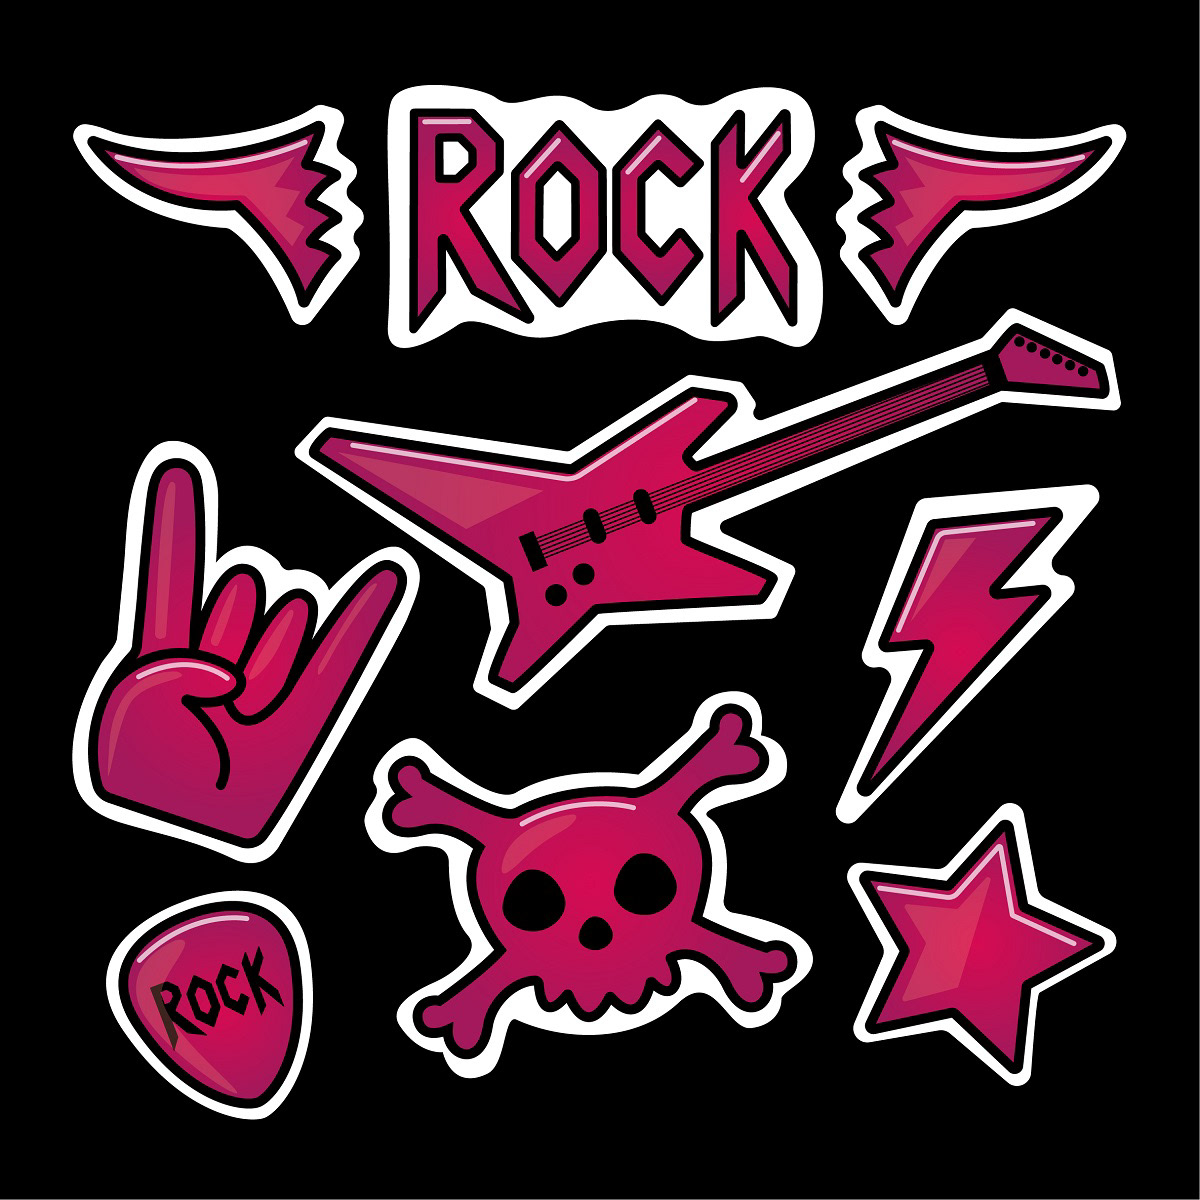 Let's Rock - sticker pack. :: Behance